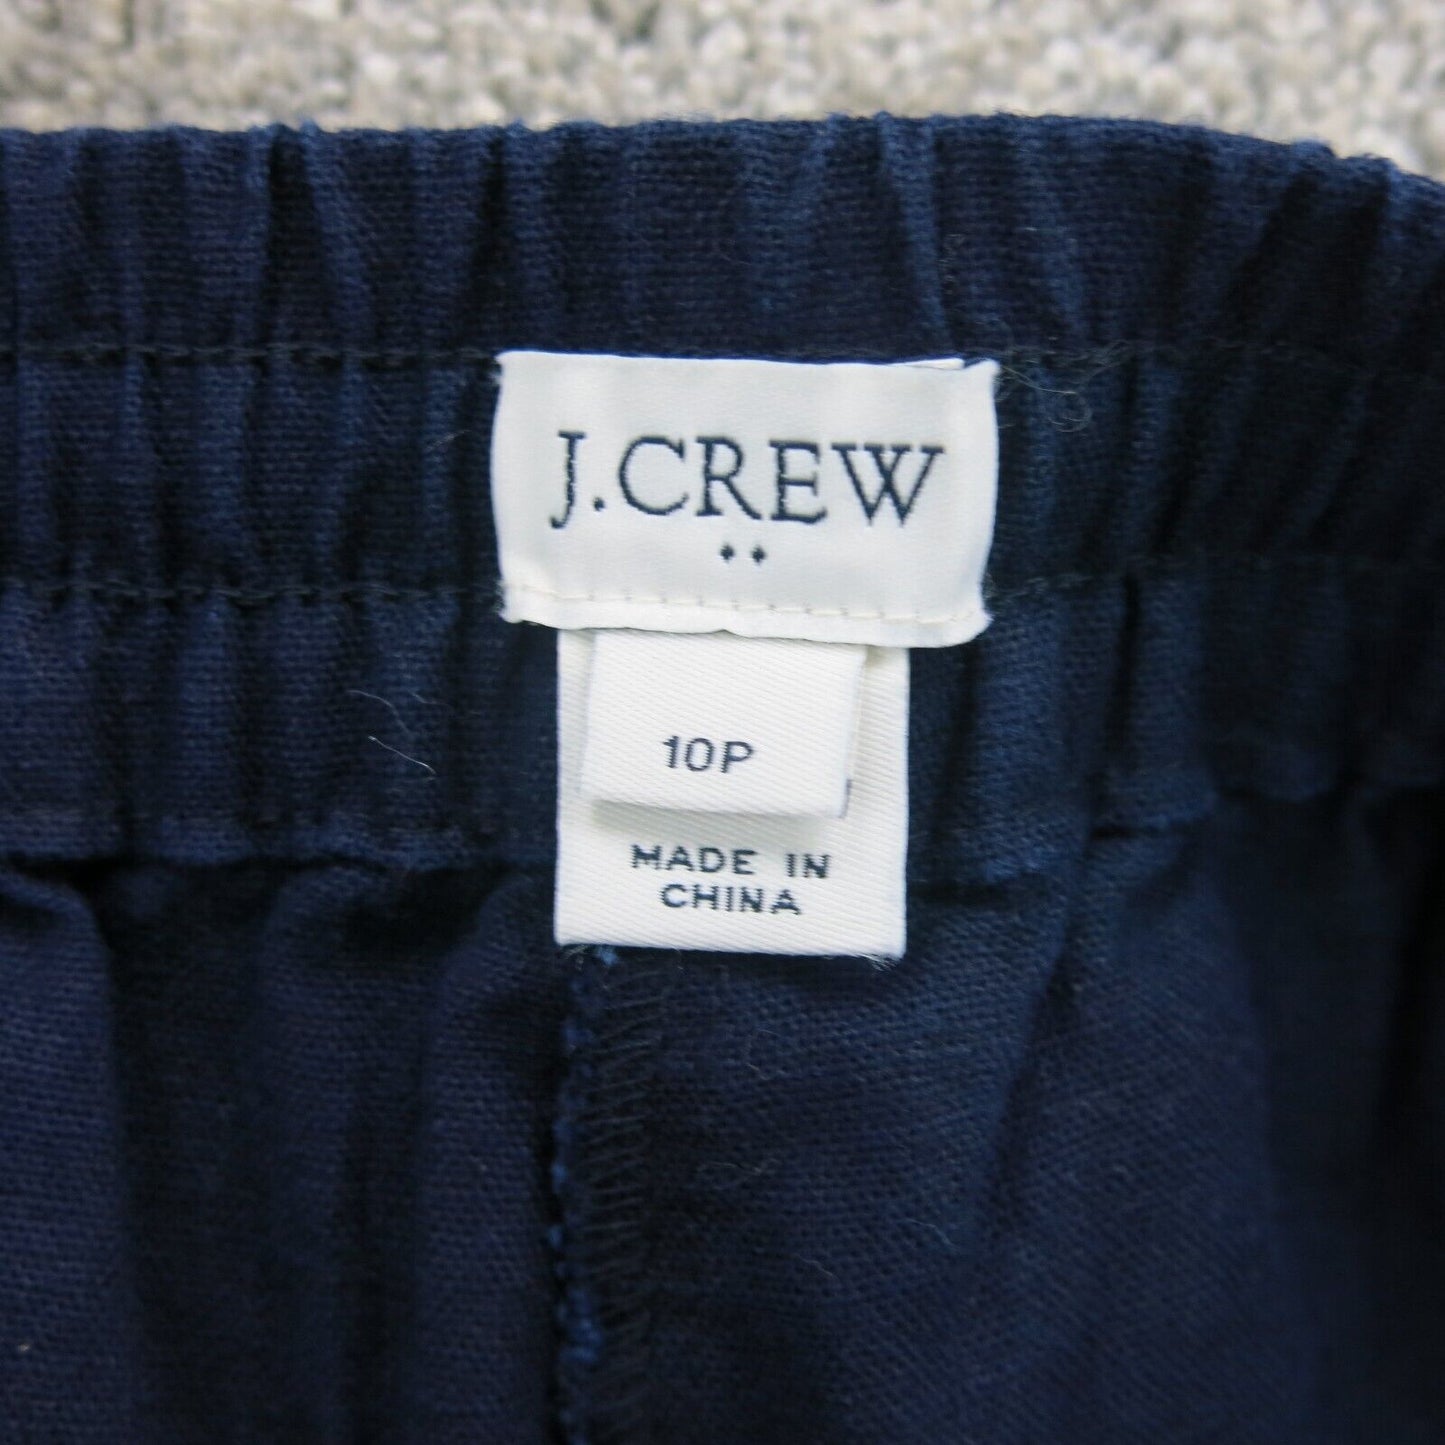 J Crew Womens Activewear Sweatpants Drawstring Mid Rise Navy Blue Size 10P